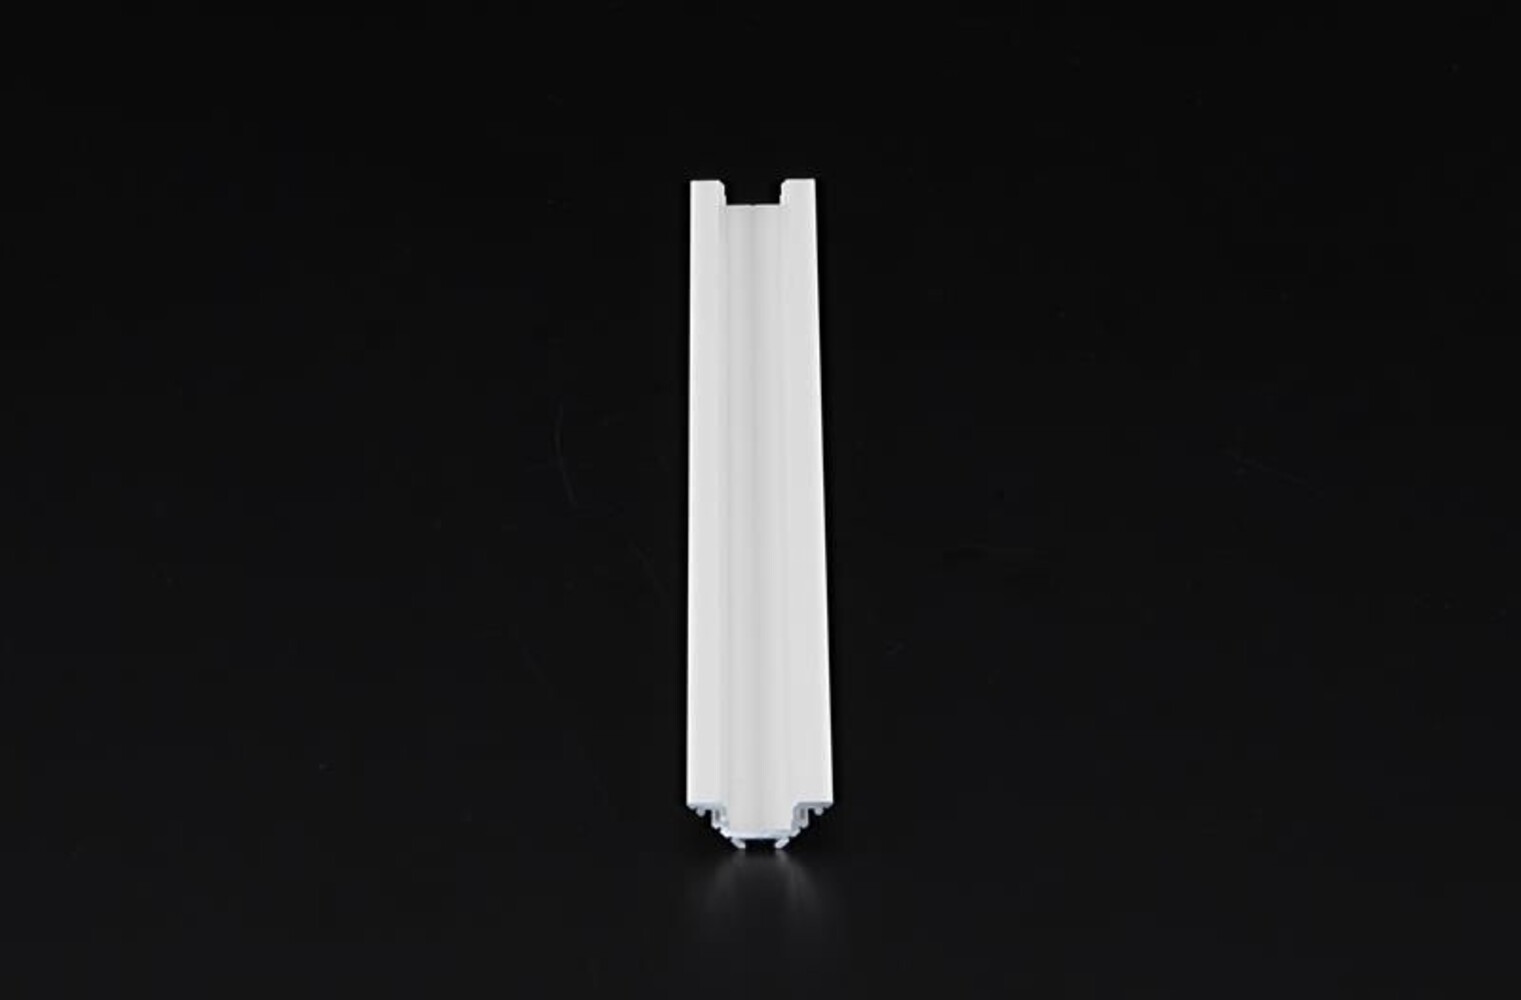 Edles Deko-Light LED Profil in Weiß matt für LED Stripes